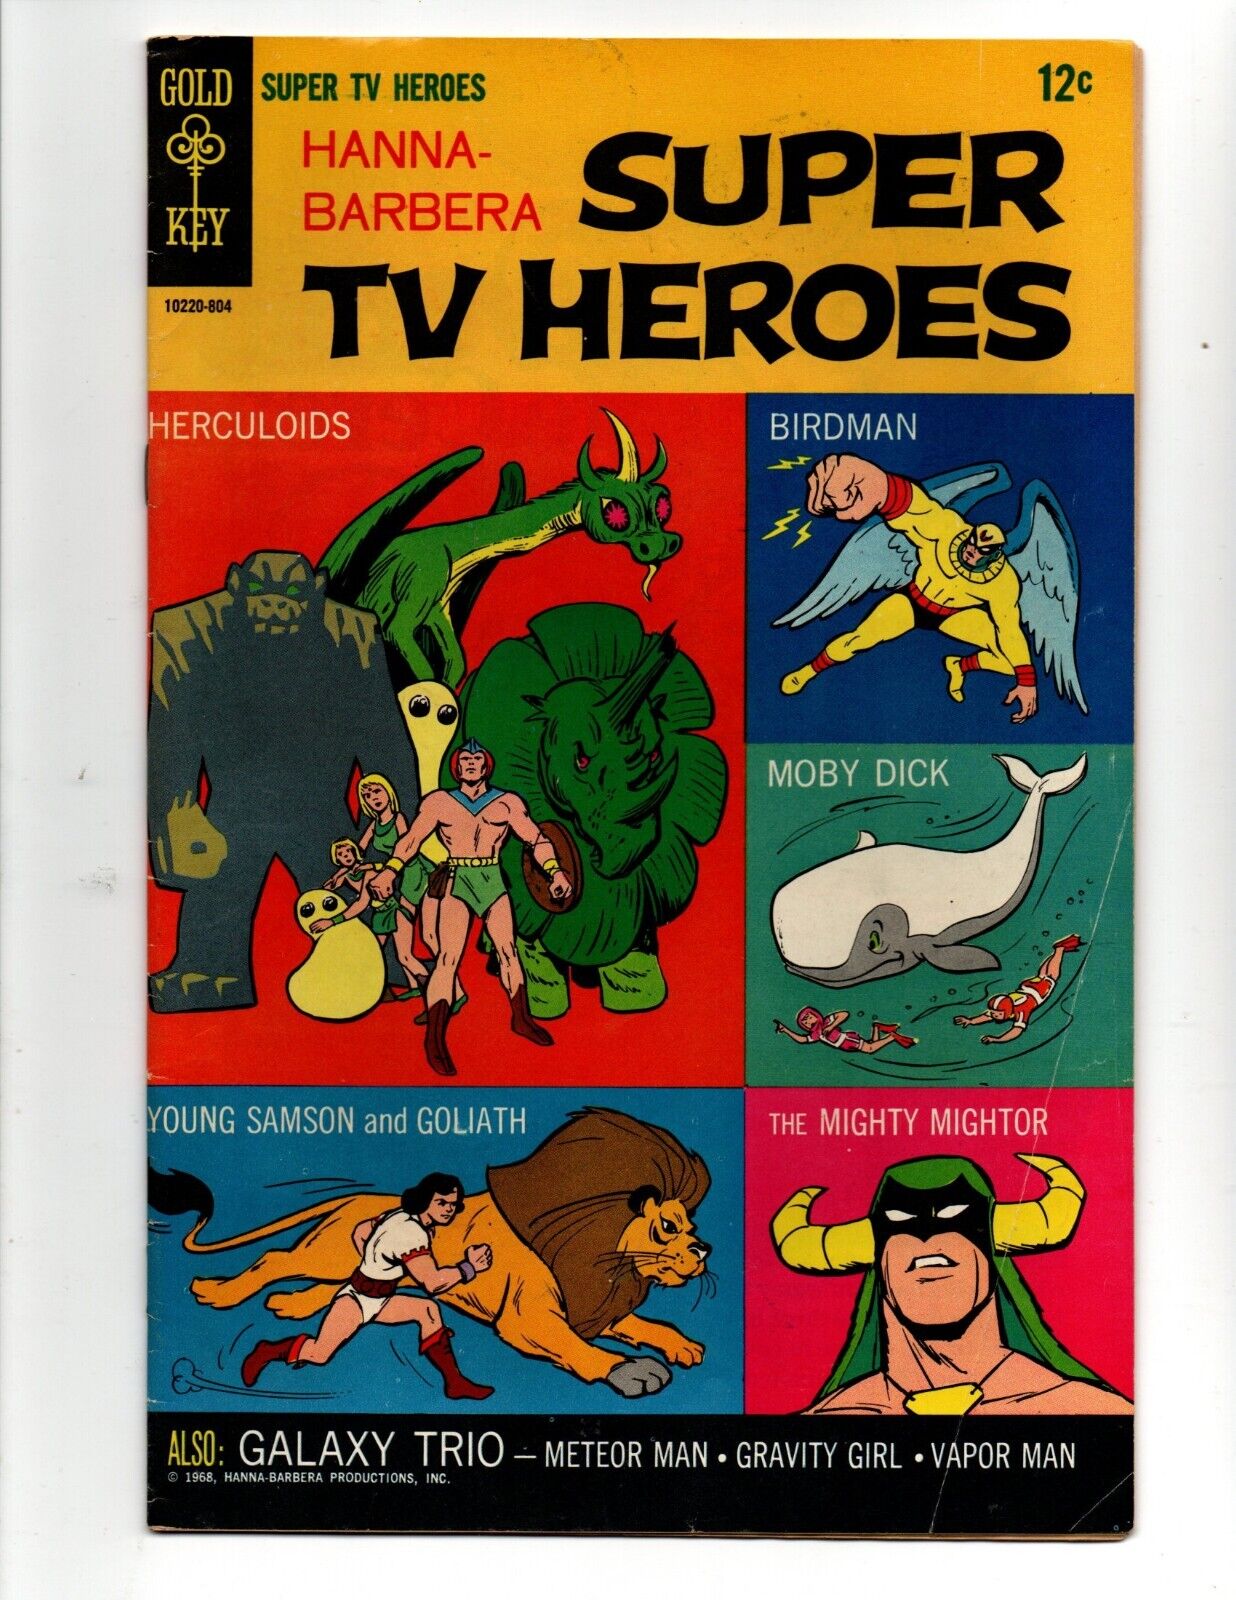 HANNA-BARBERA SUPER TV HEROES #1  Shazzan Birdman Moby Dick Herculoids 5.0